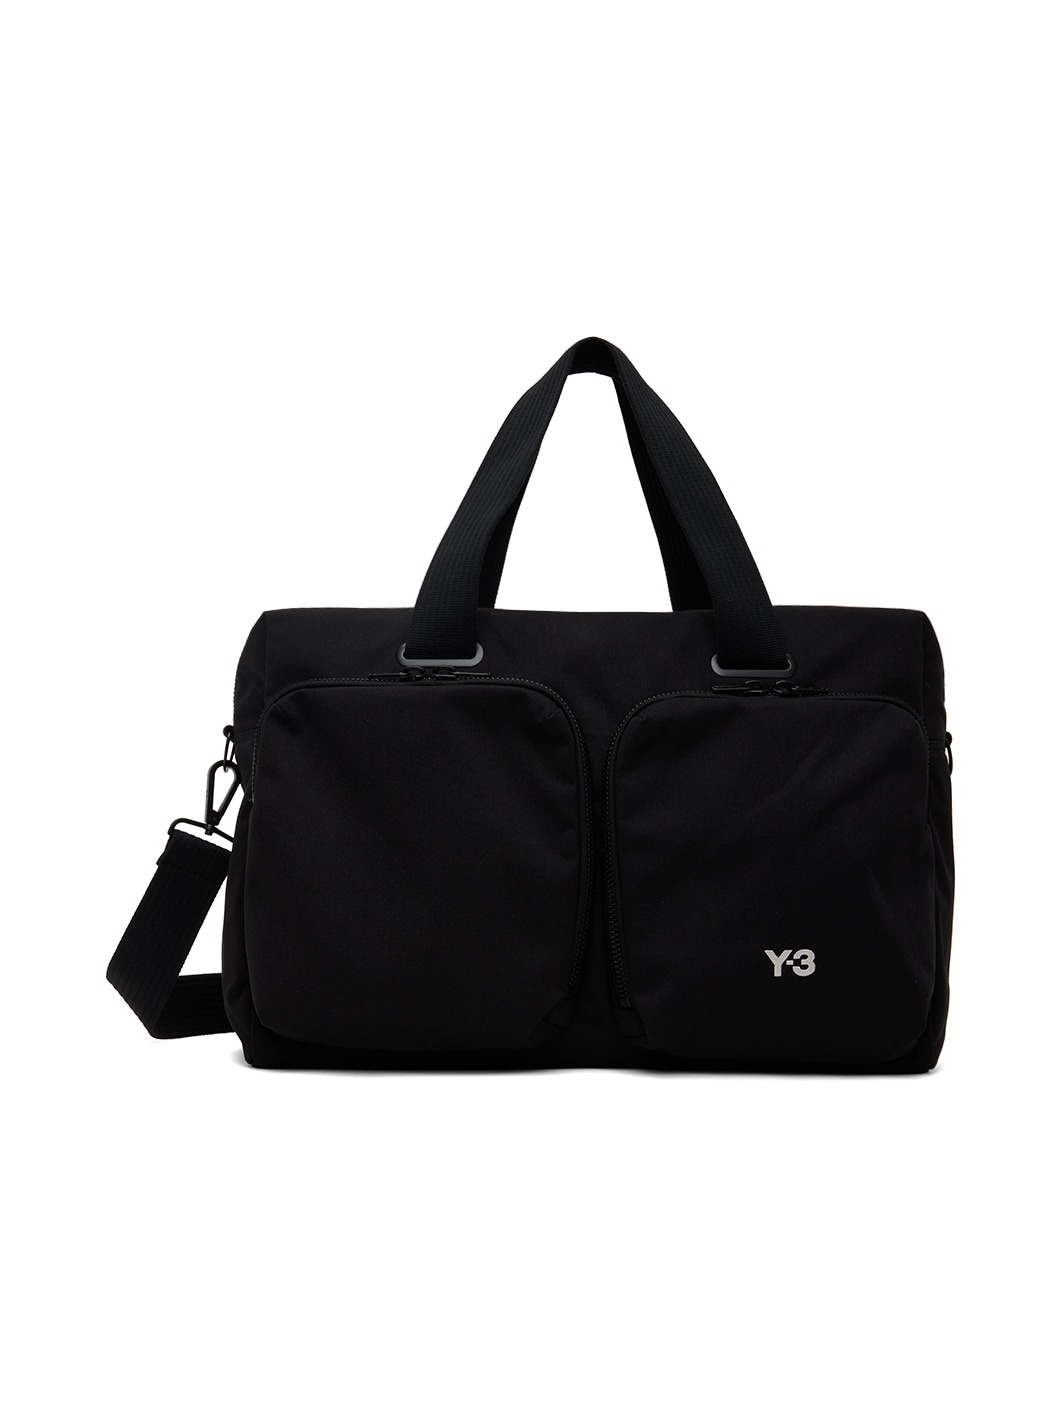 Black Travel Duffle Bag - 1